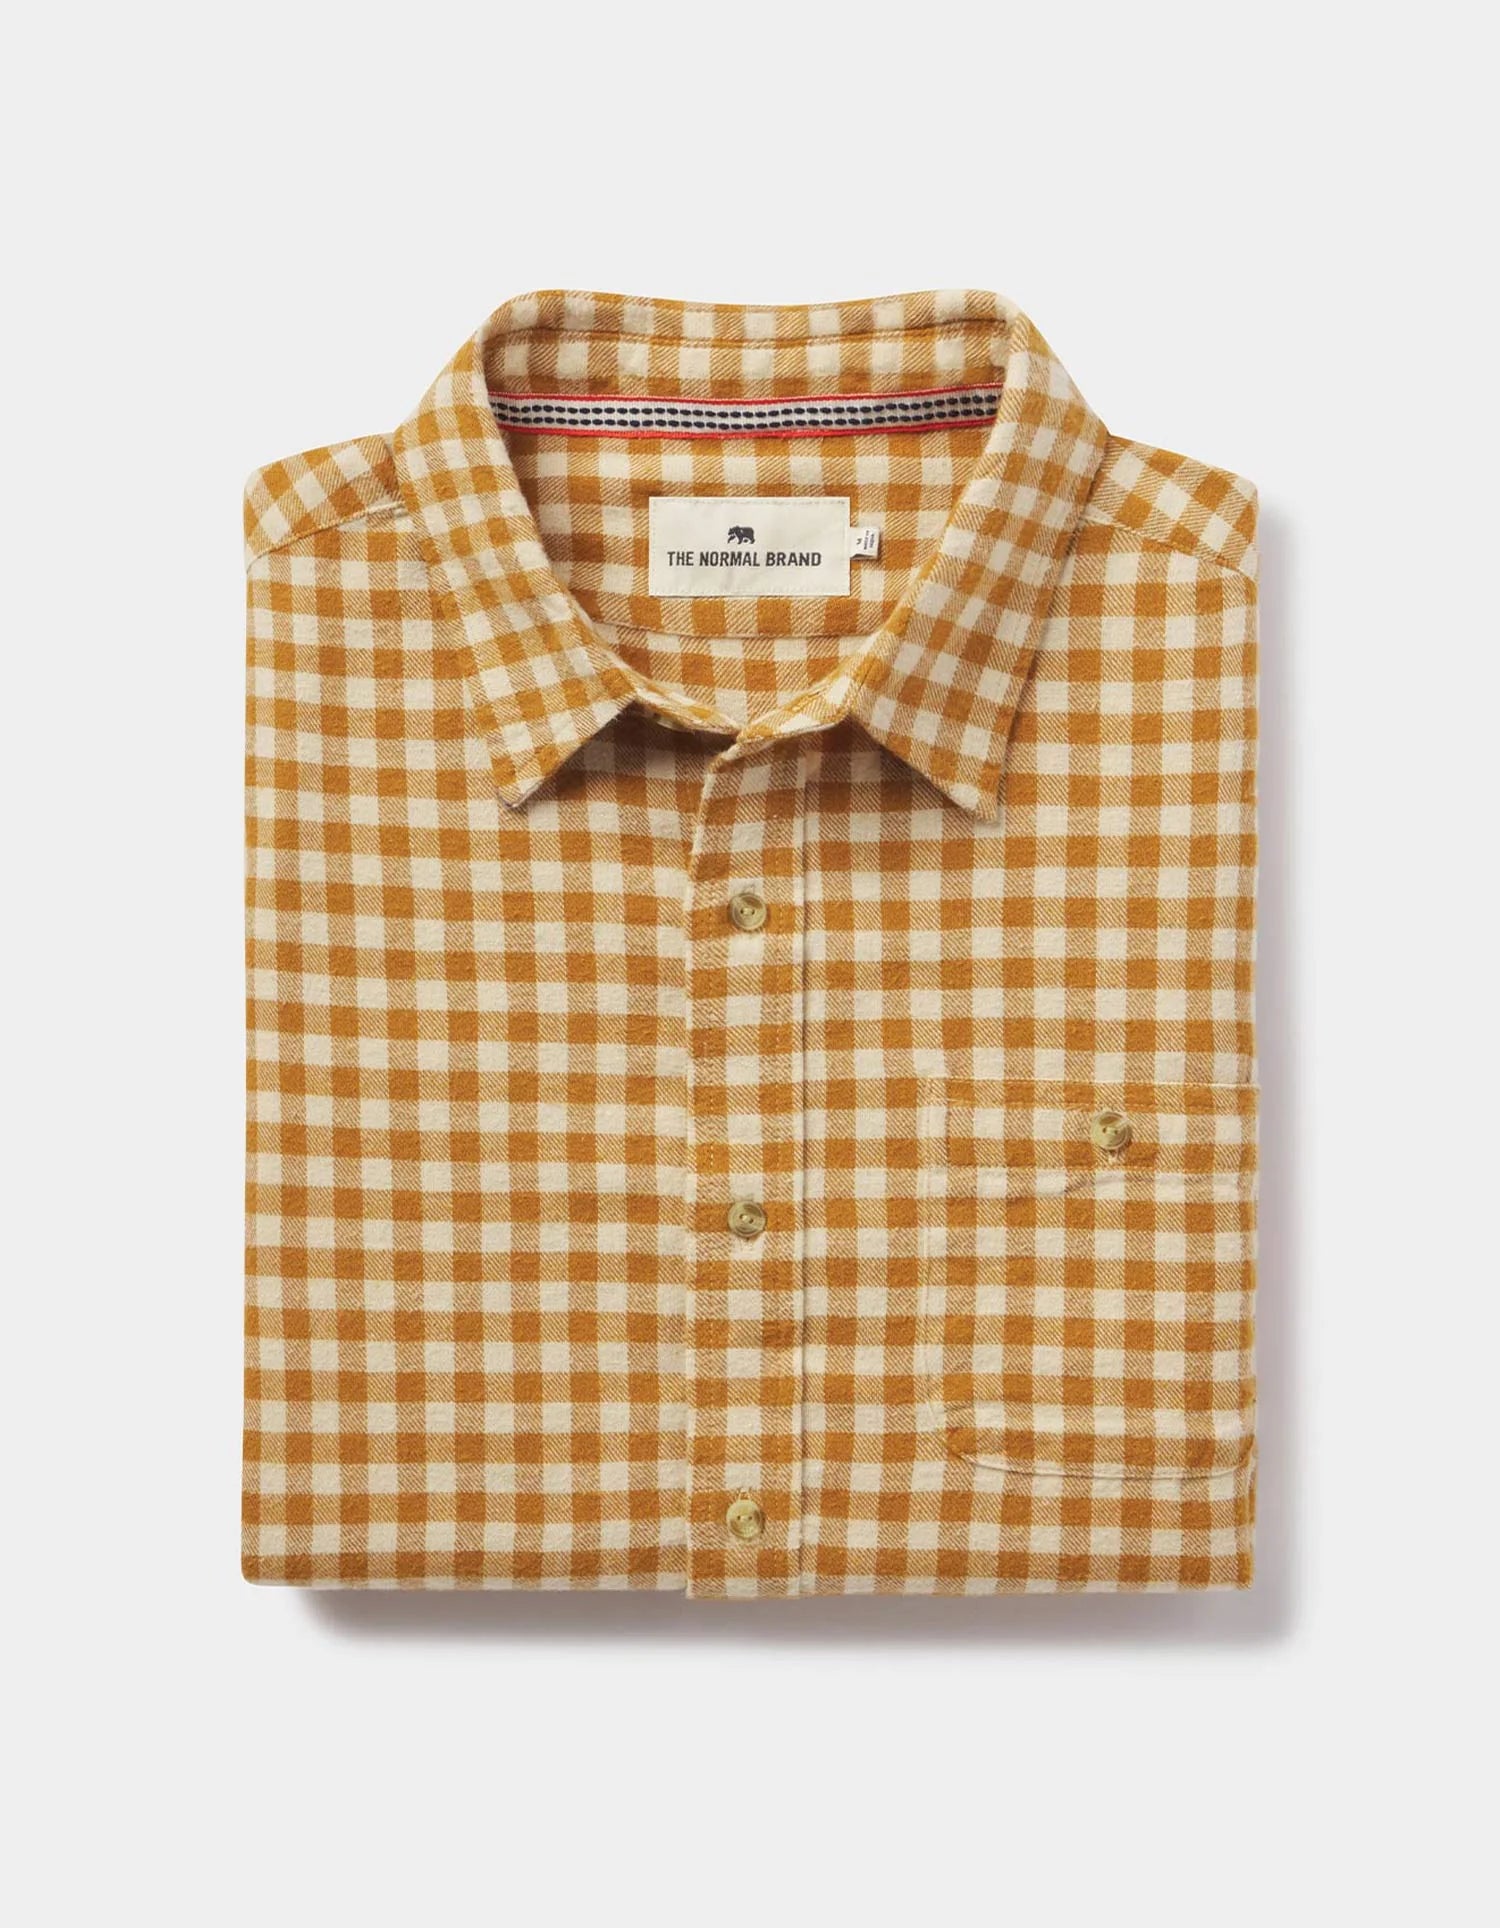 The Normal Brand Stephen Button Up Shirt - Honey Plaid